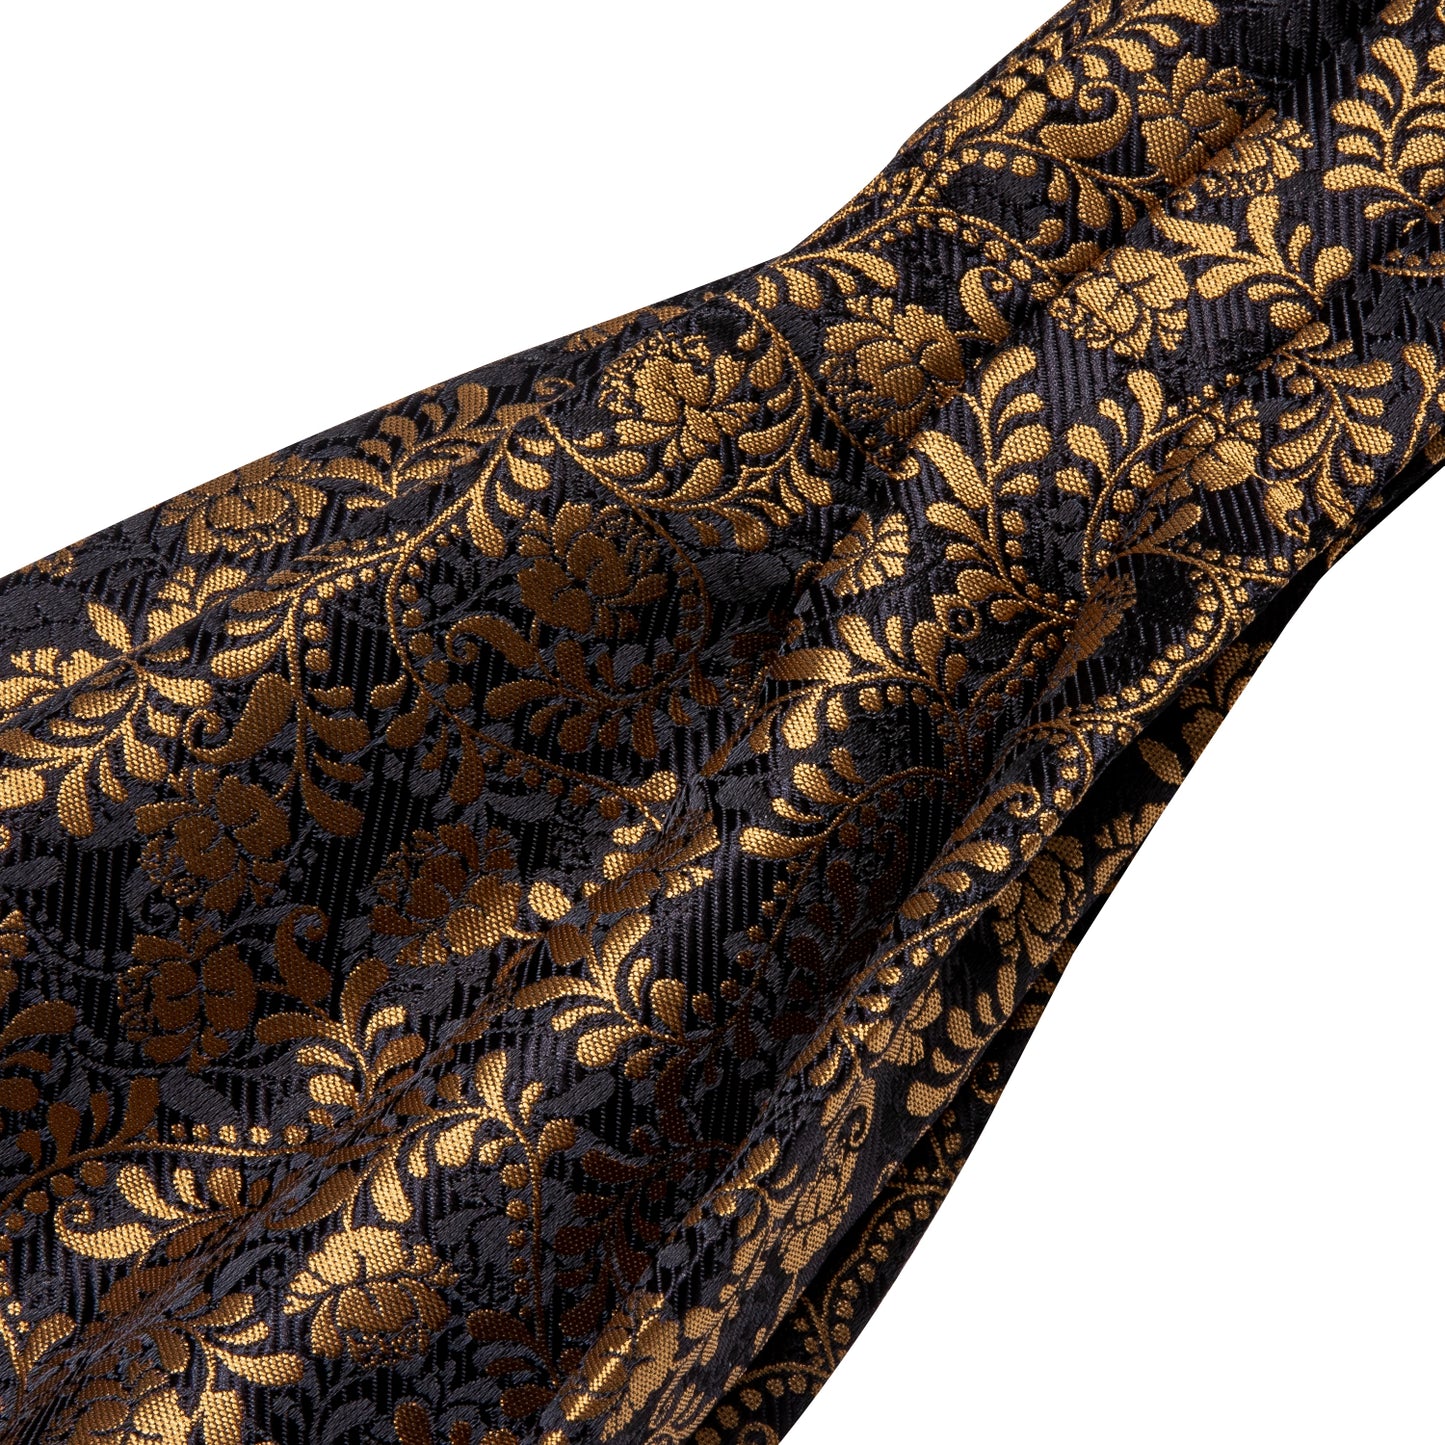 Victorian Ascot Silky Floral Day Cravat Set [Palace Goldens]